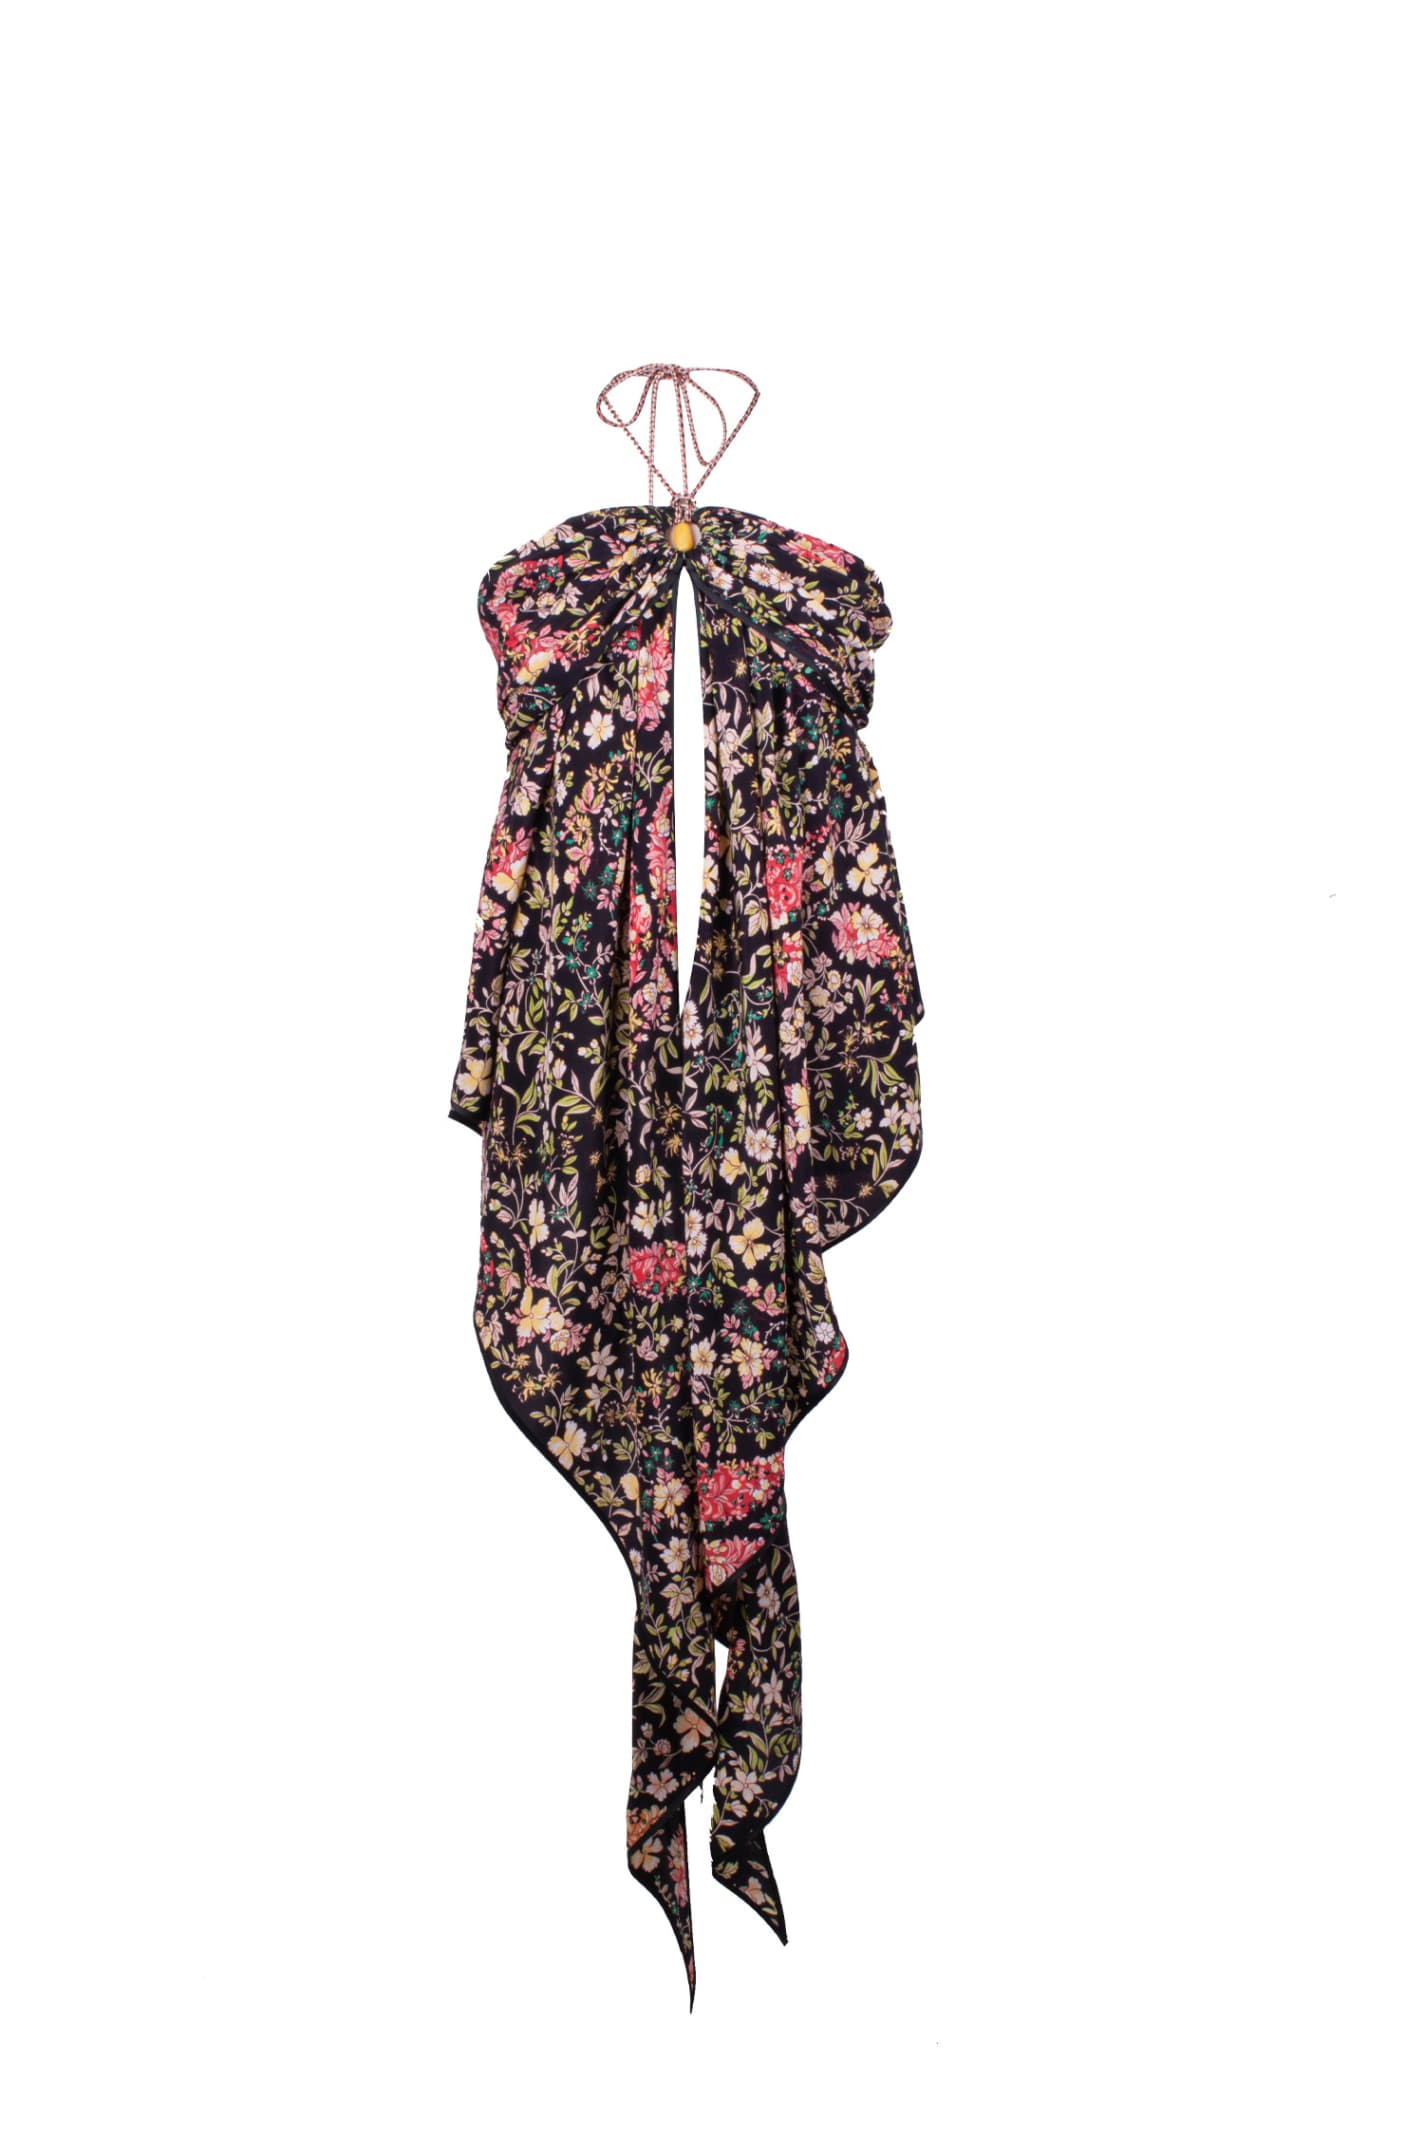 Etro Floral Paisley Silk Top